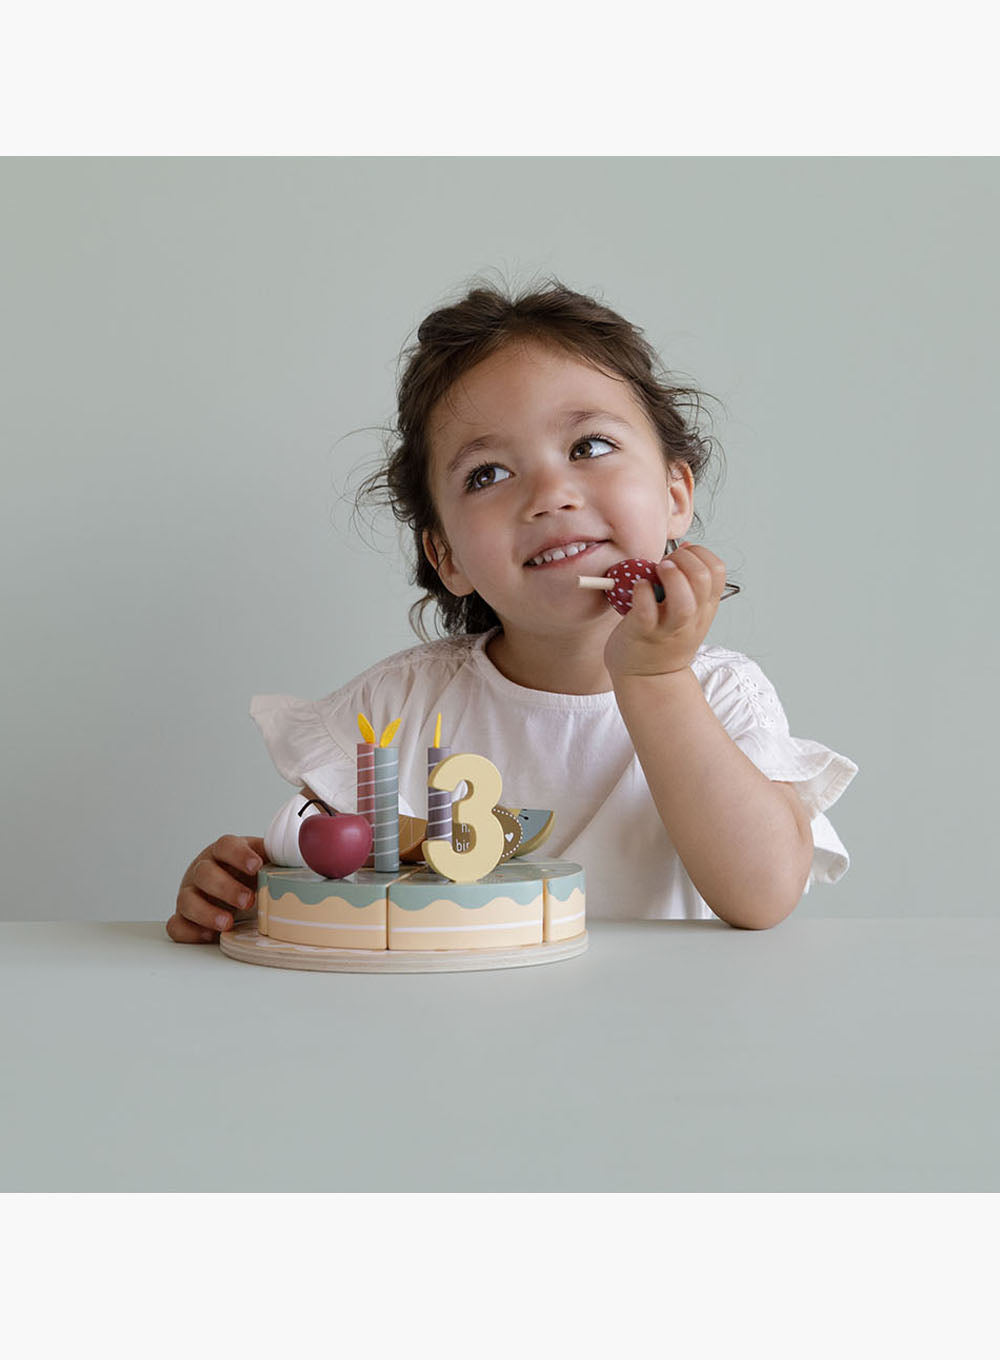 Pretend Play Wooden Birthday Cake Kitchen Play Toy | Shopee Singapore